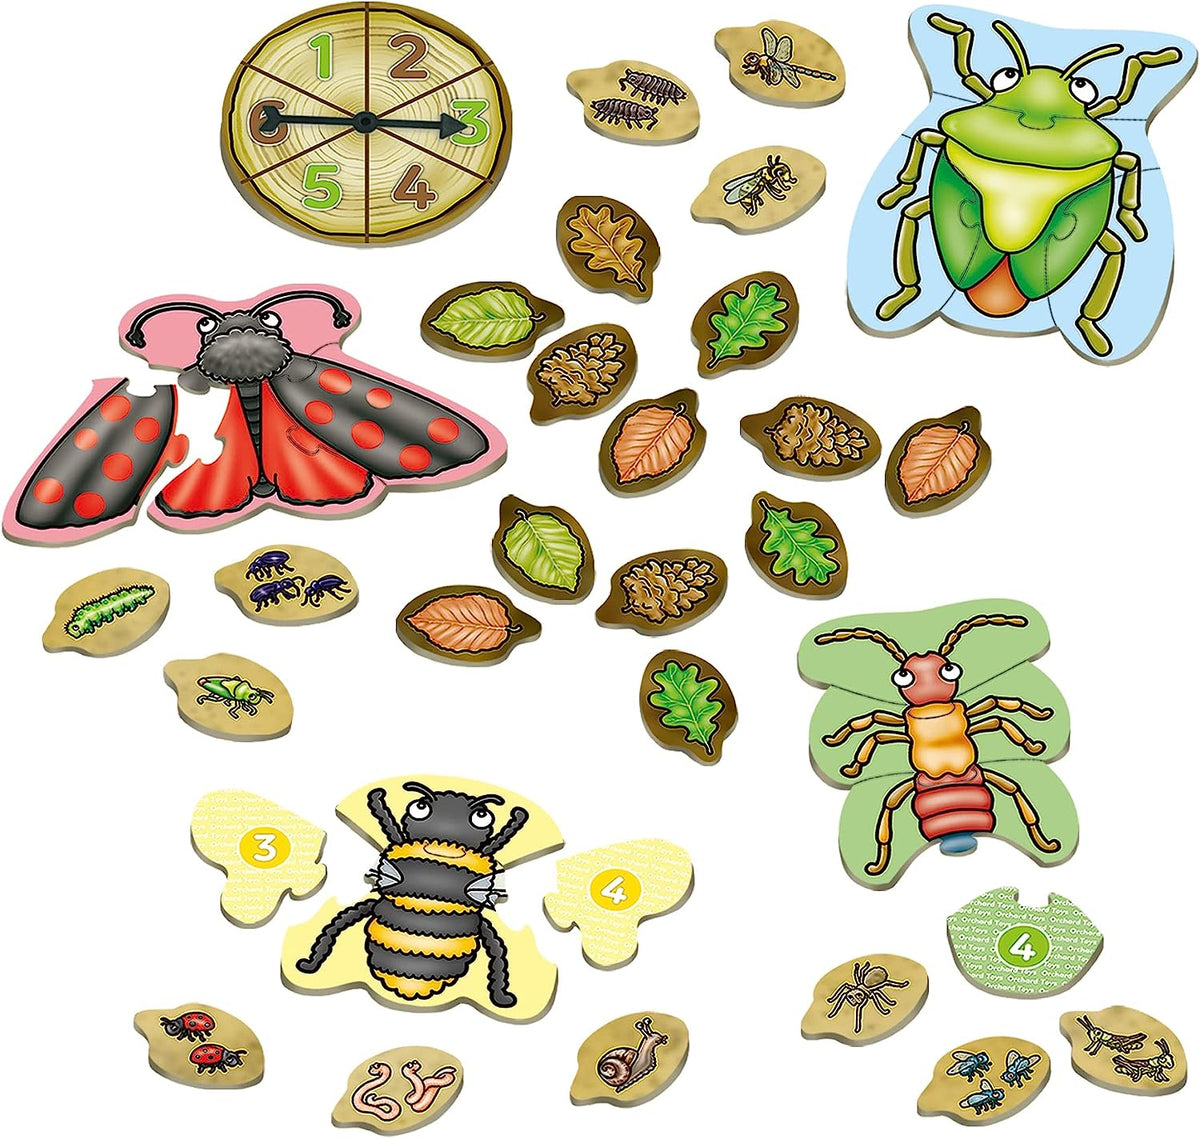 Orchard Toys - Bug Hunters product image 2